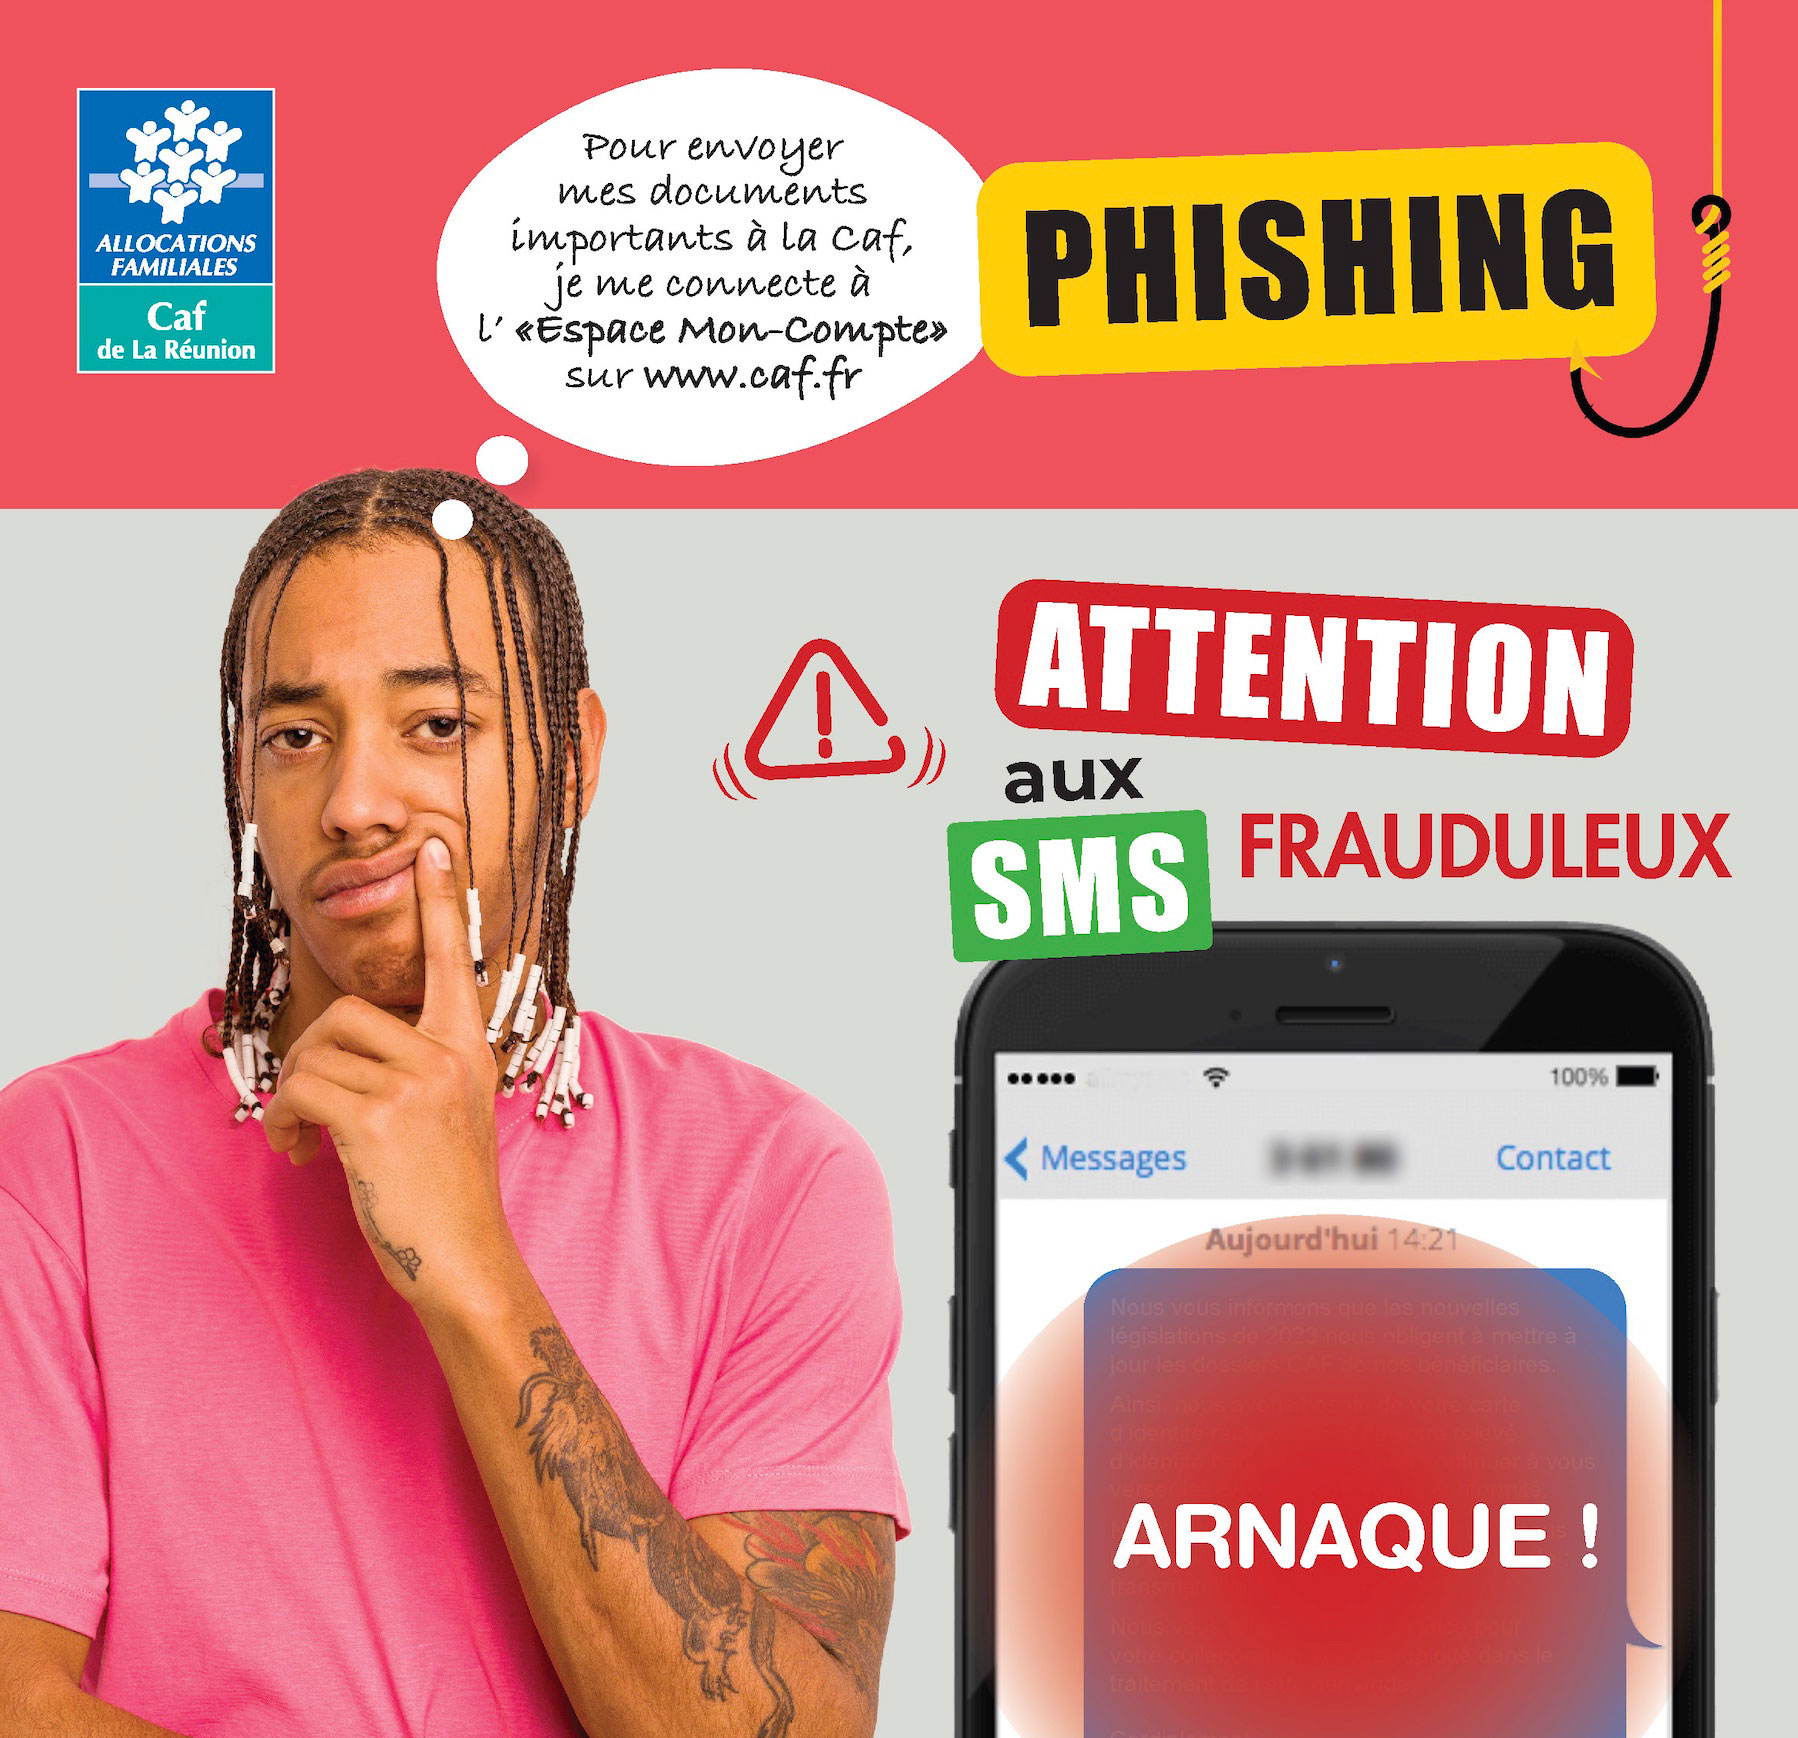 Phishing SMS